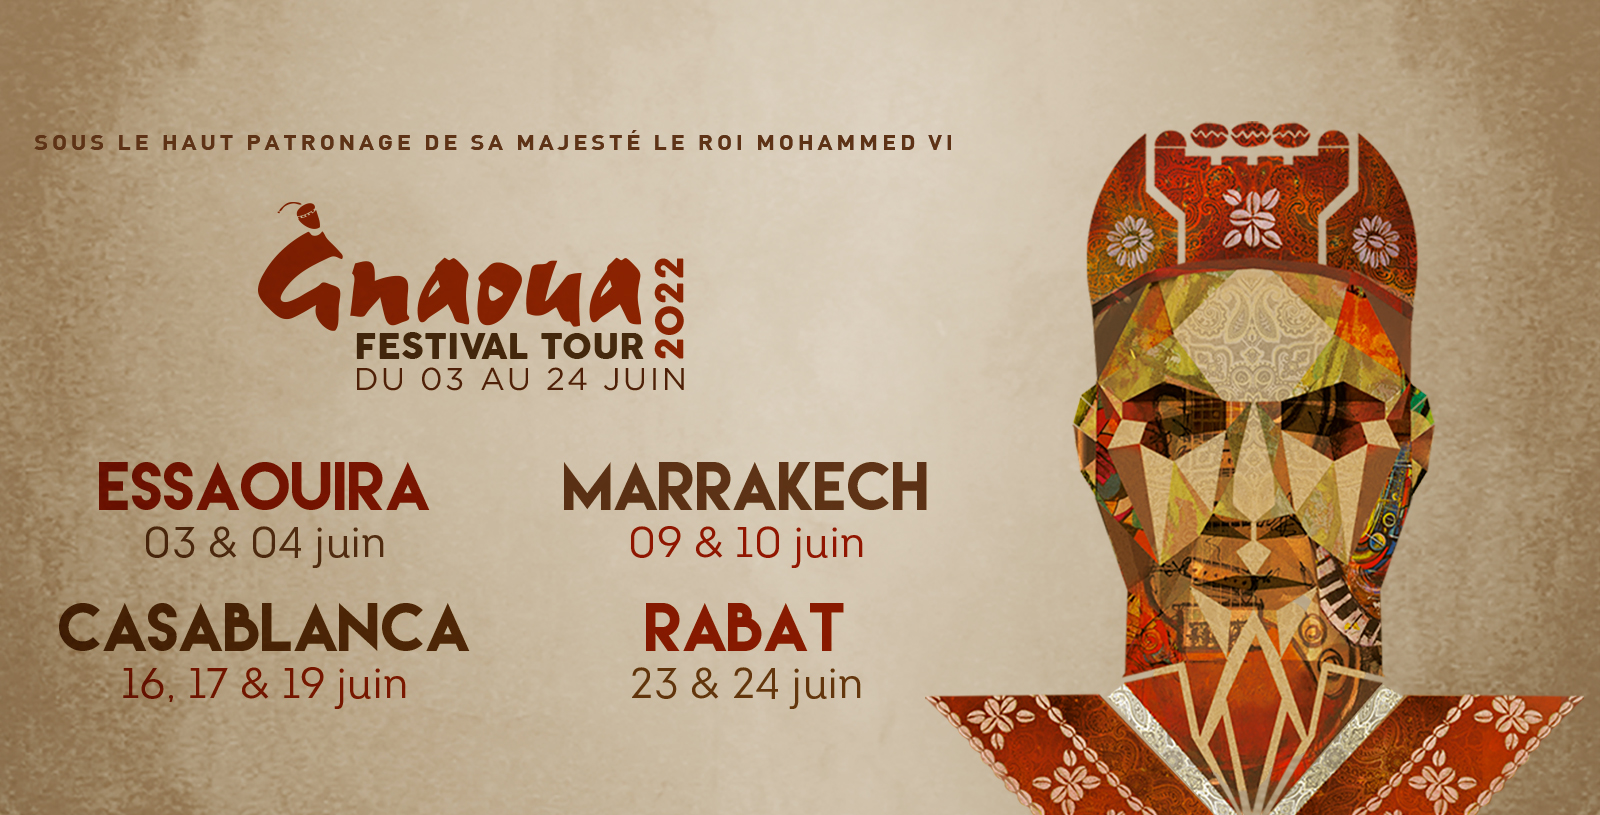 gnaoua festival tour 2022 in essaouira marrakech casablanca and rabat